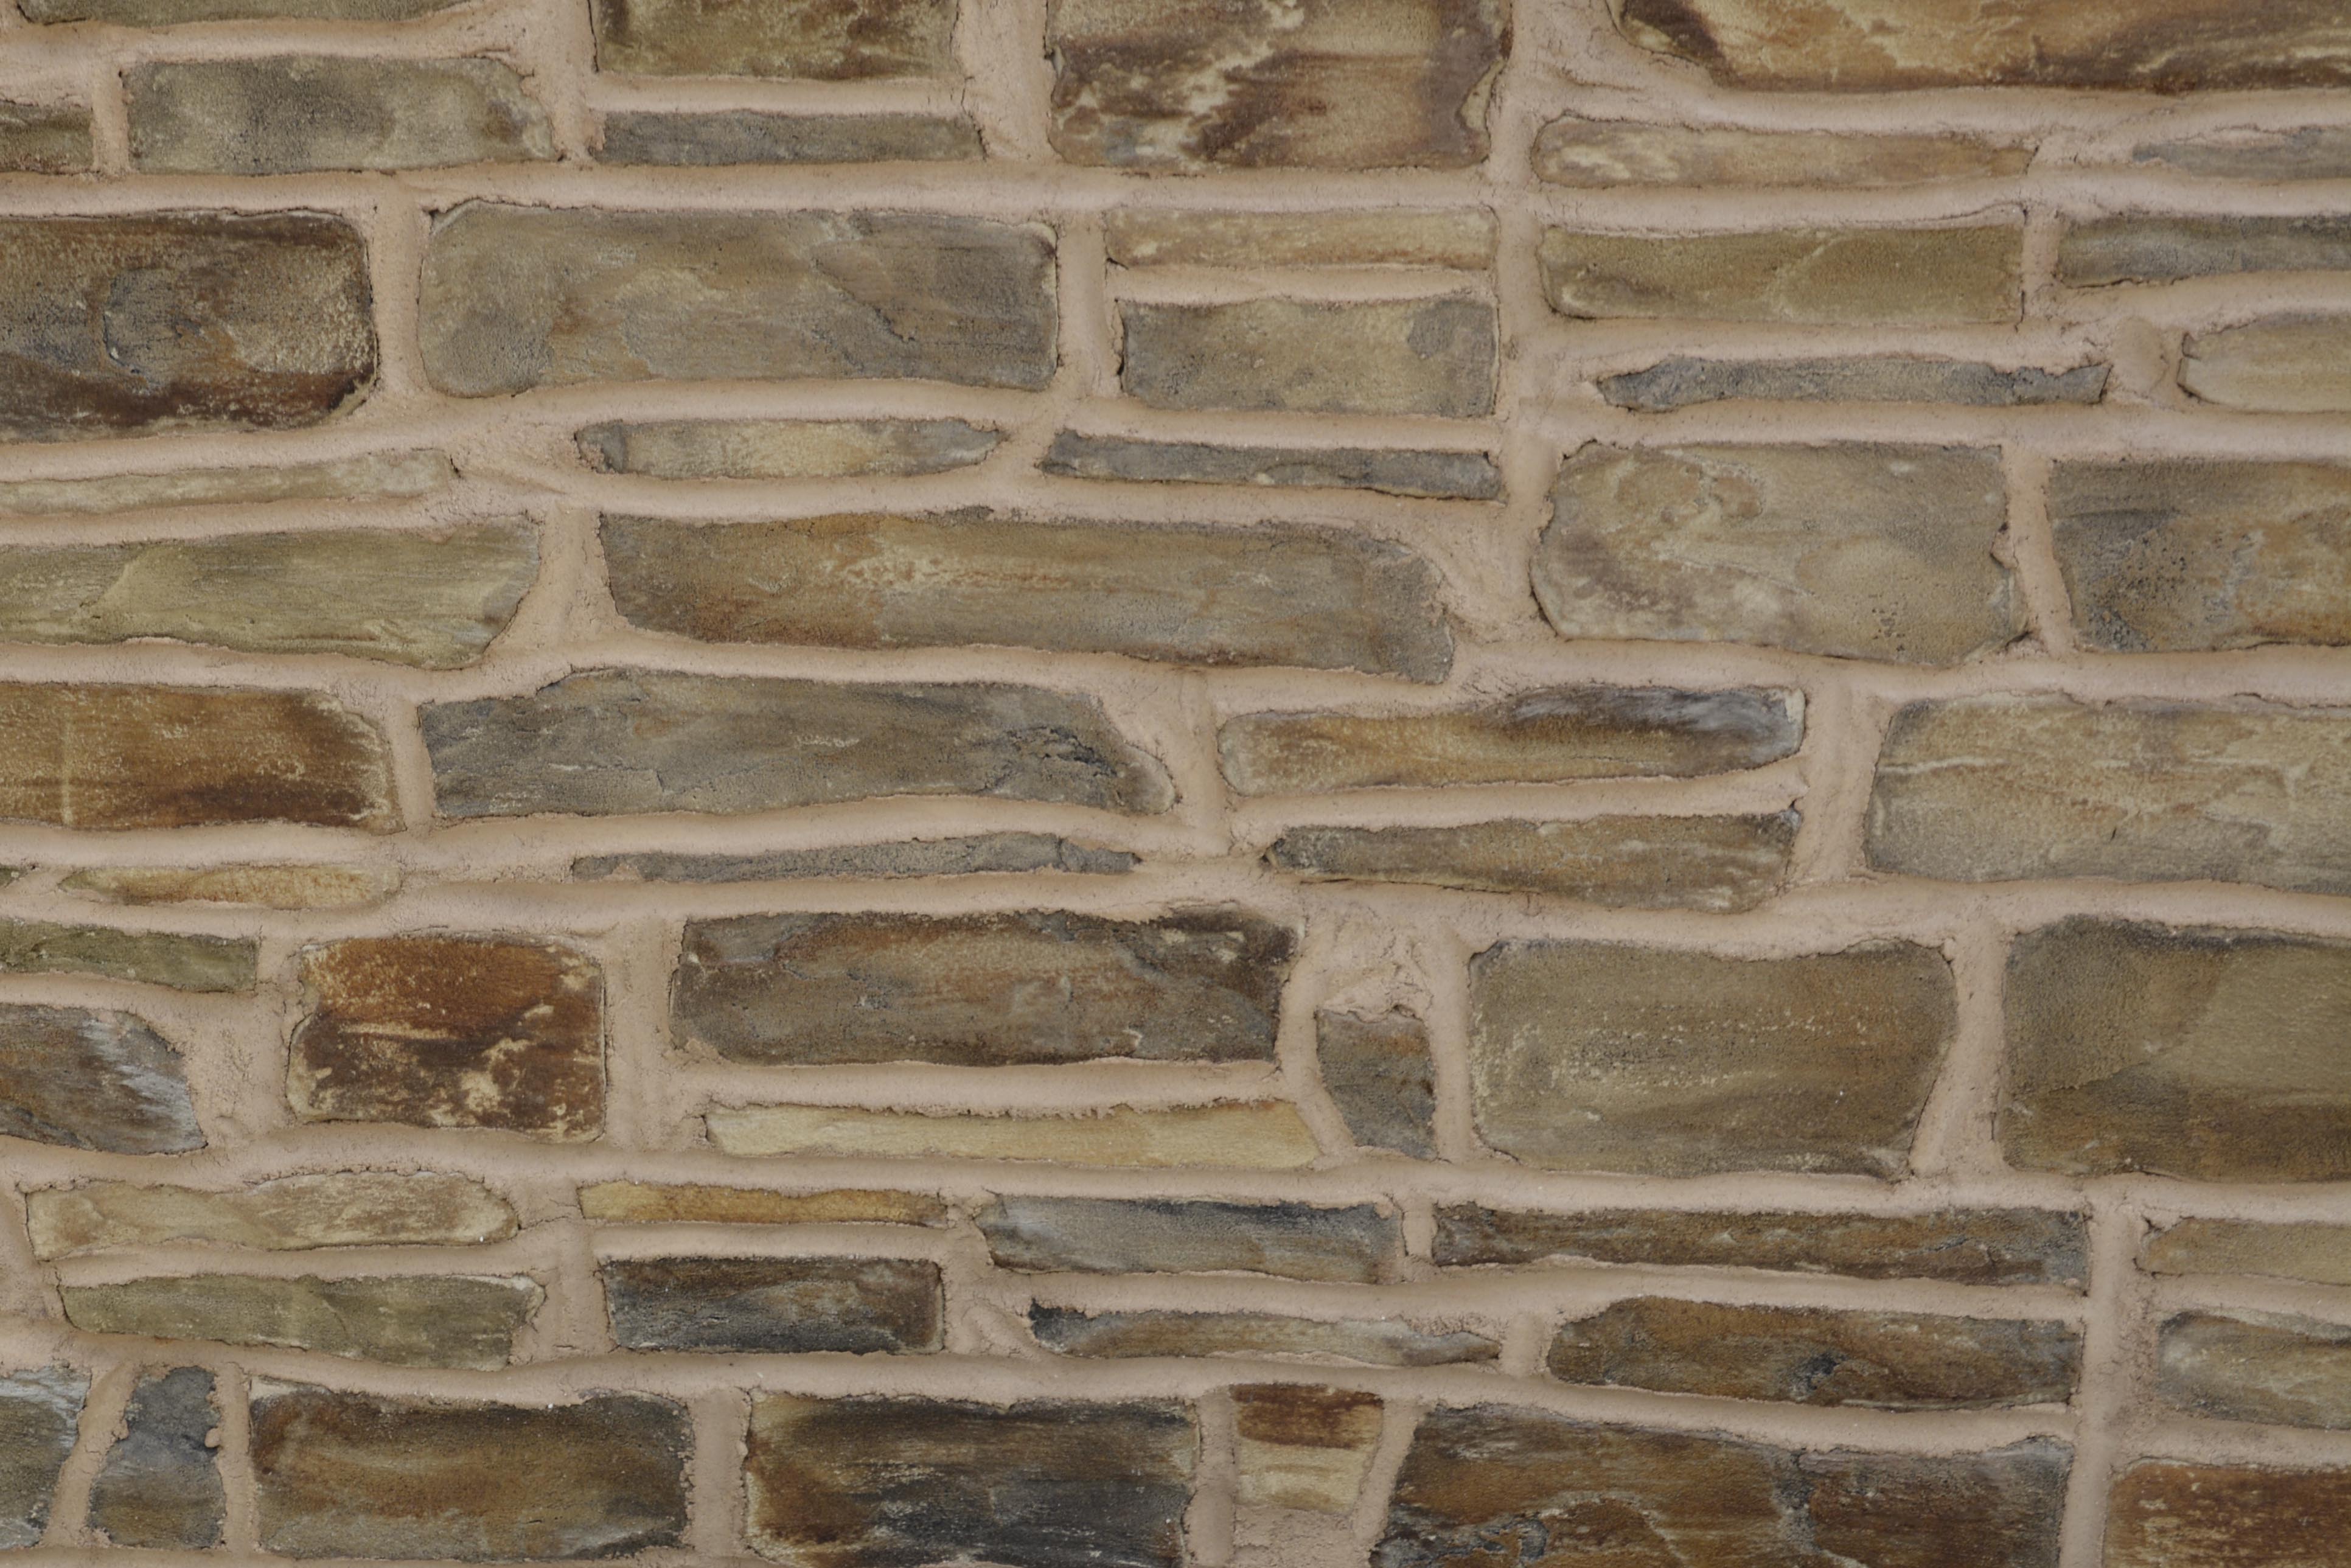 ArtBrick stone finish to be showcased on over 200 Durham homes!